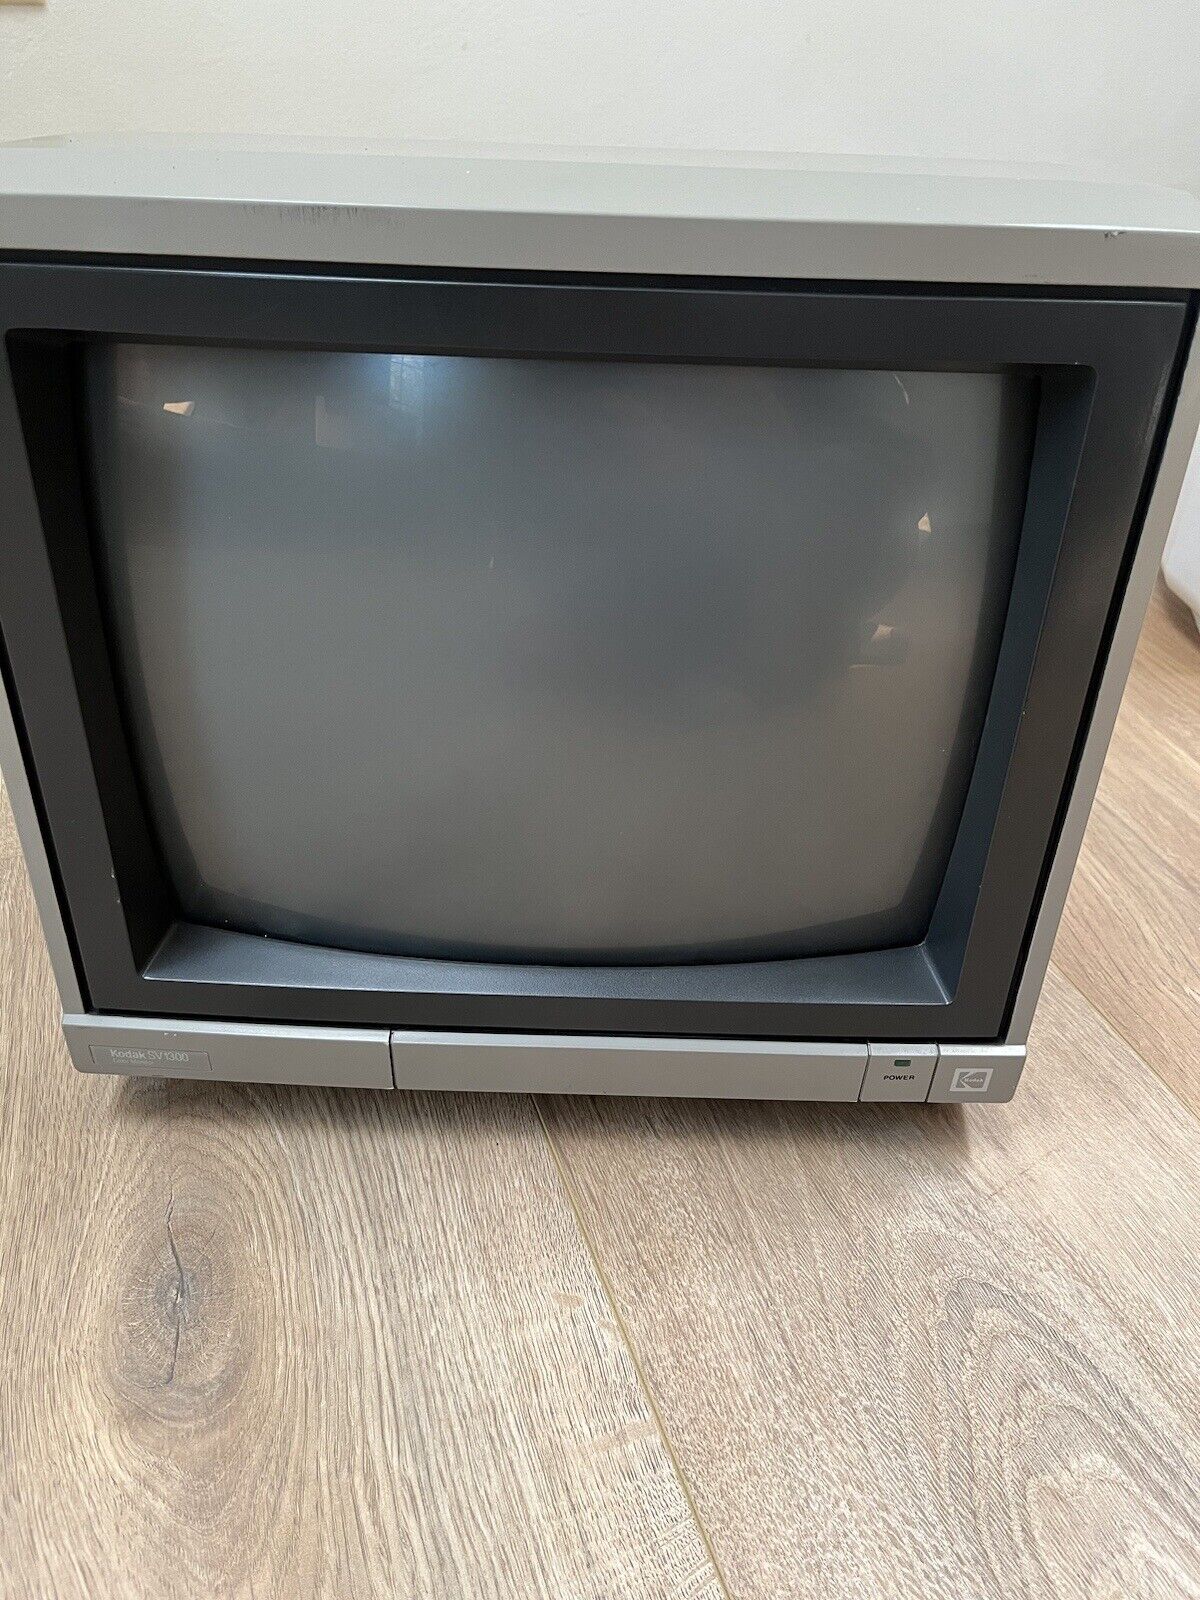 Vintage KODAK SV1300 Color Monitor Was Used For Commodore Amiga